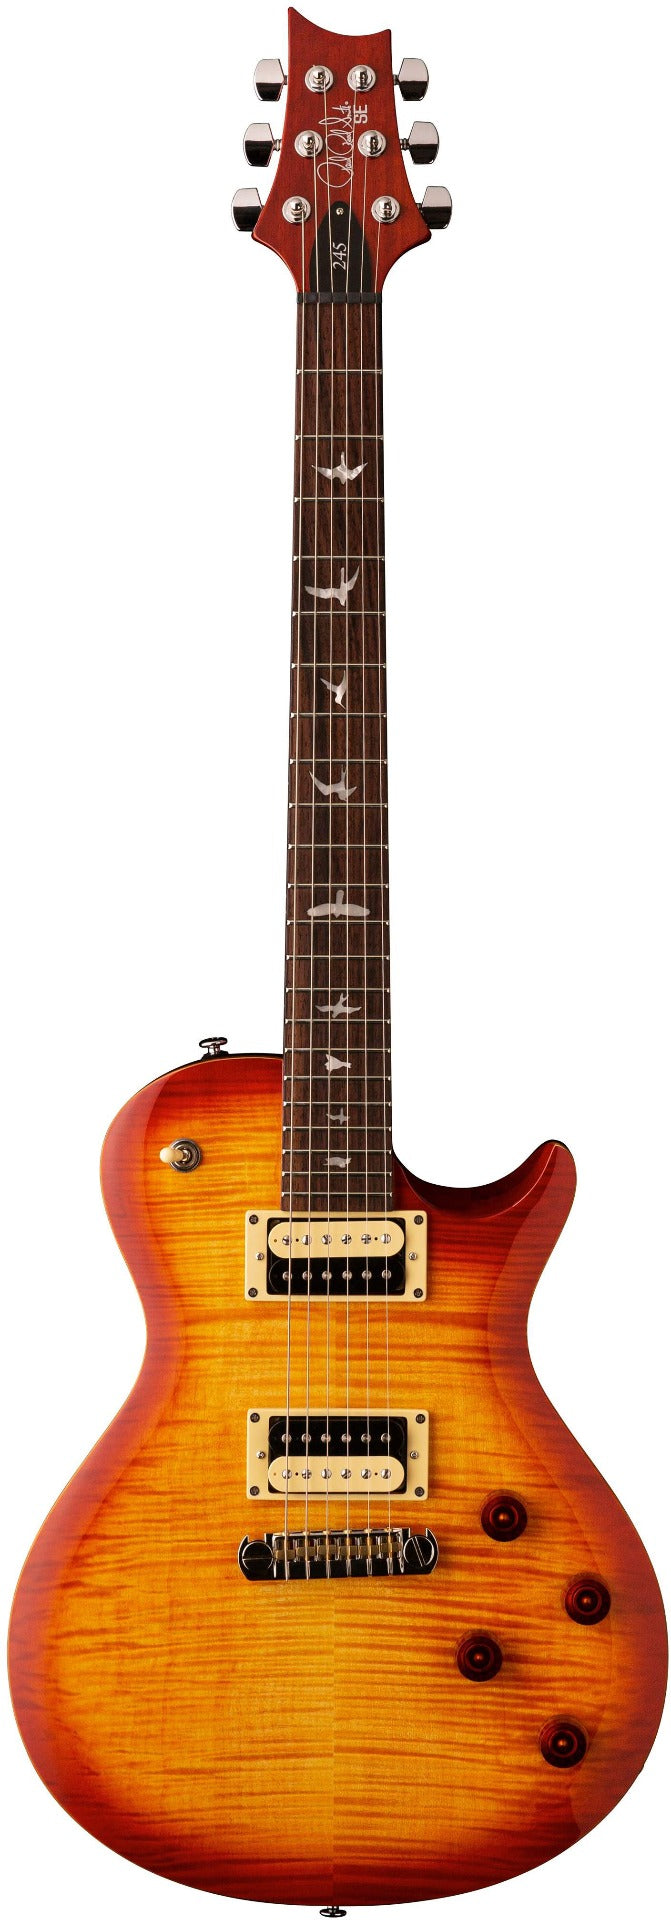 PRS SE 245 Singlecut Electric Guitar in Vintage Sunburst